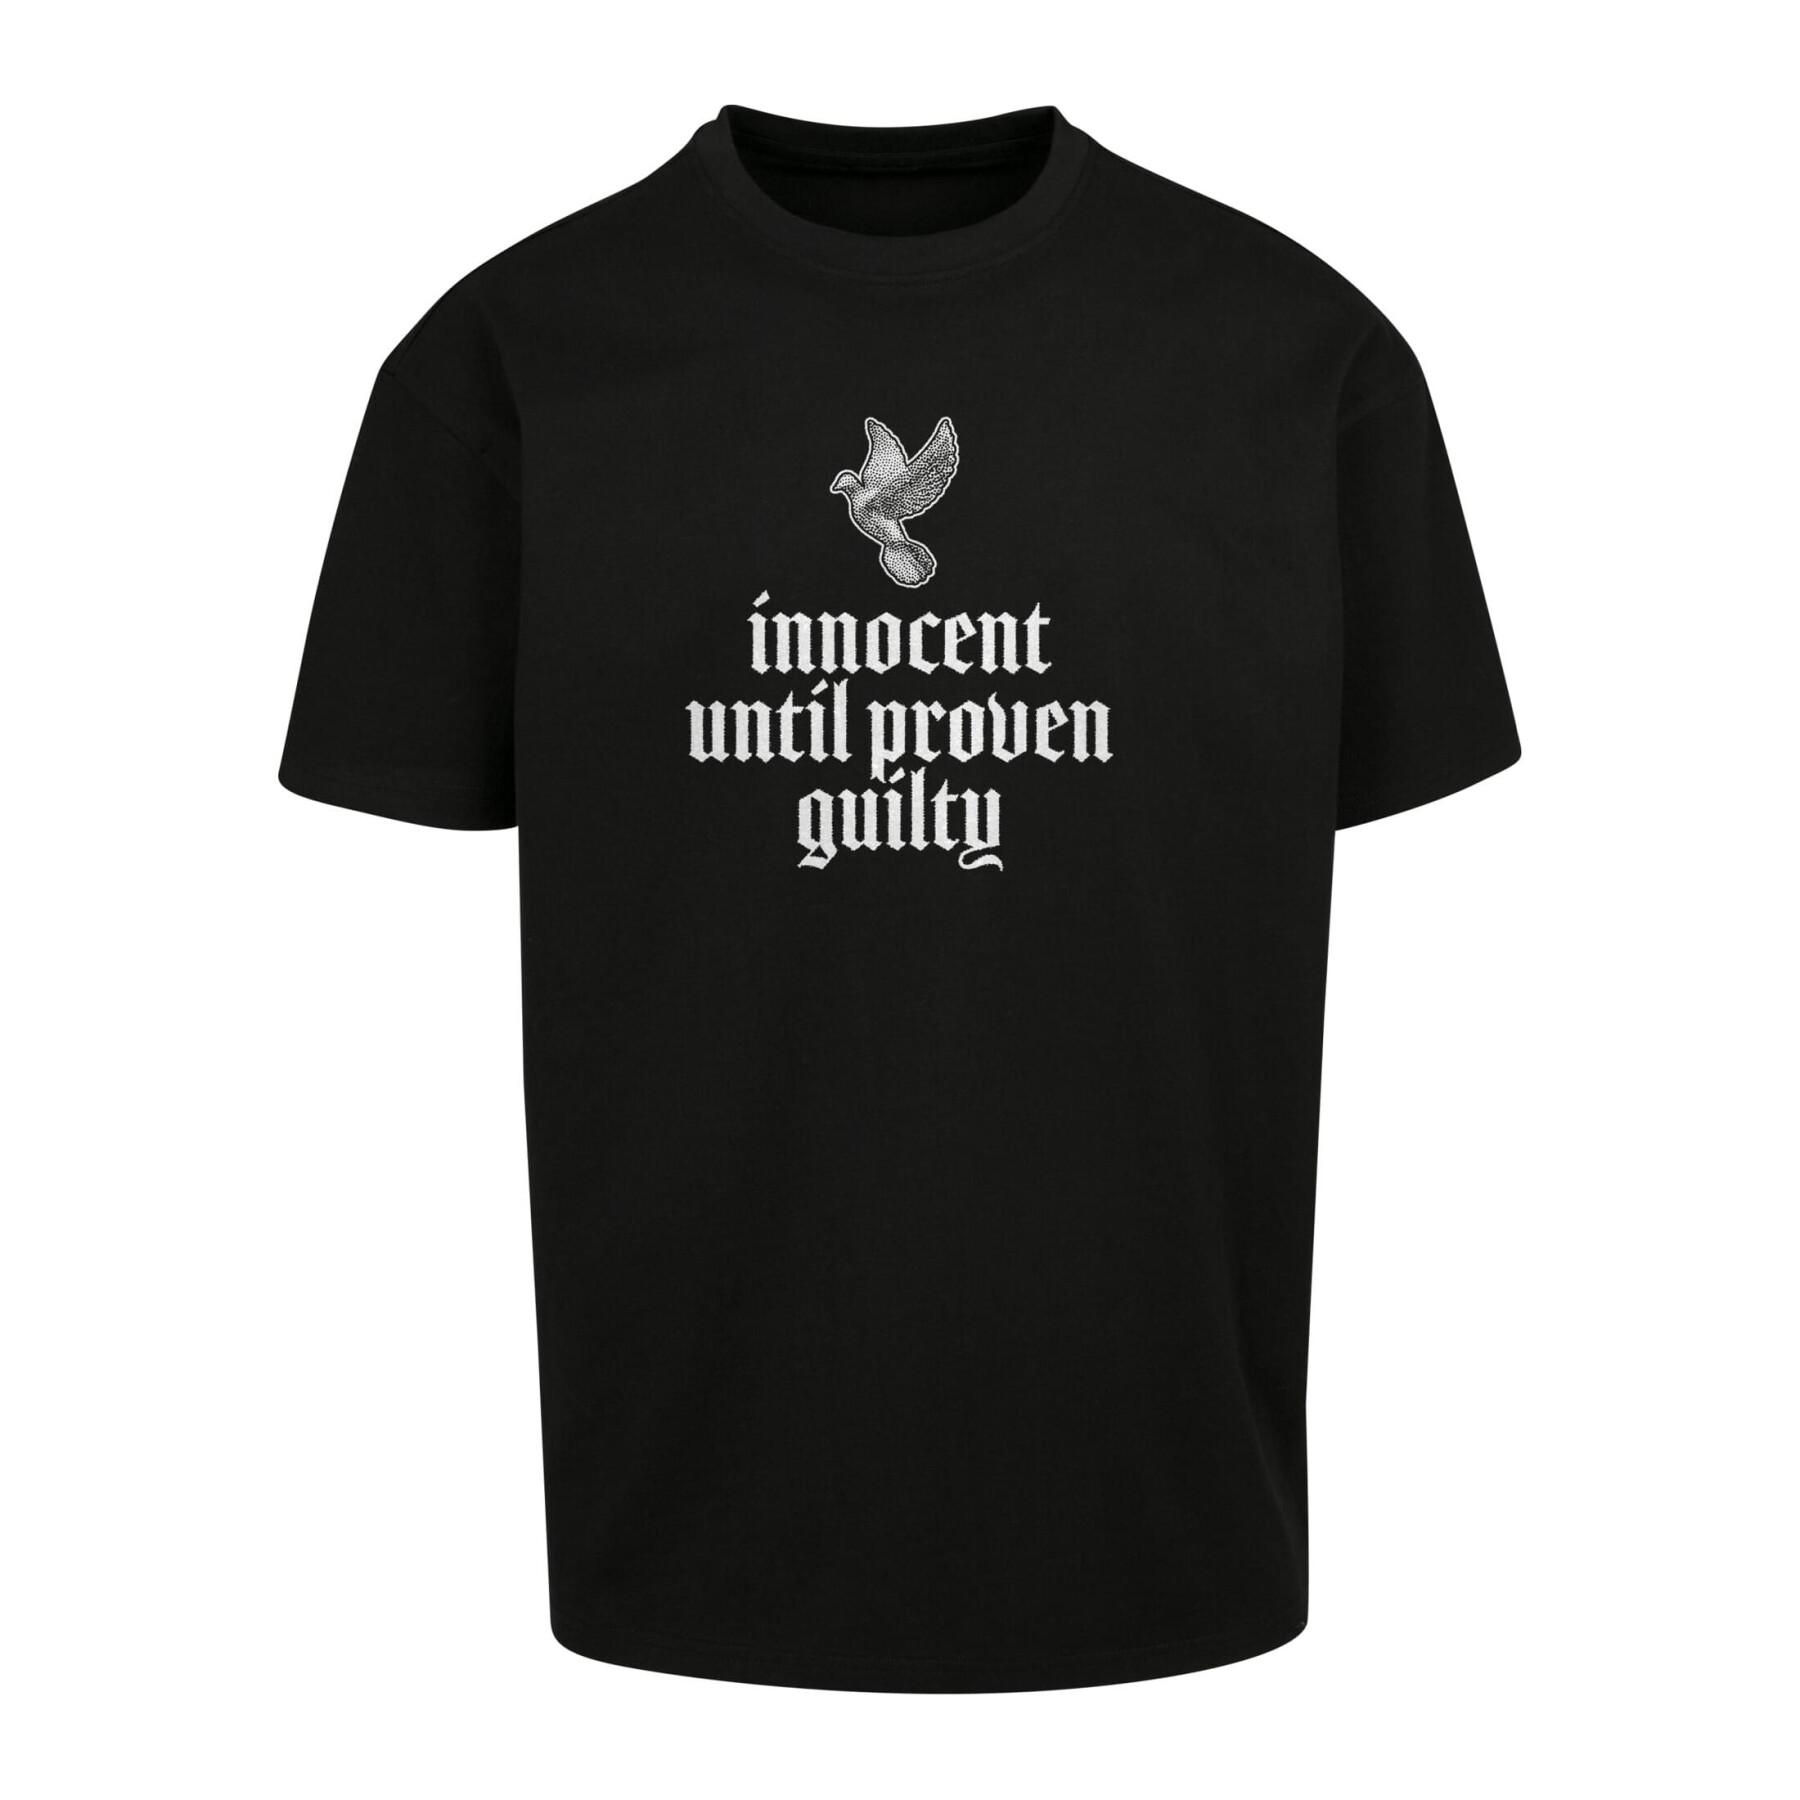 Camiseta oversize Mister Tee Justice